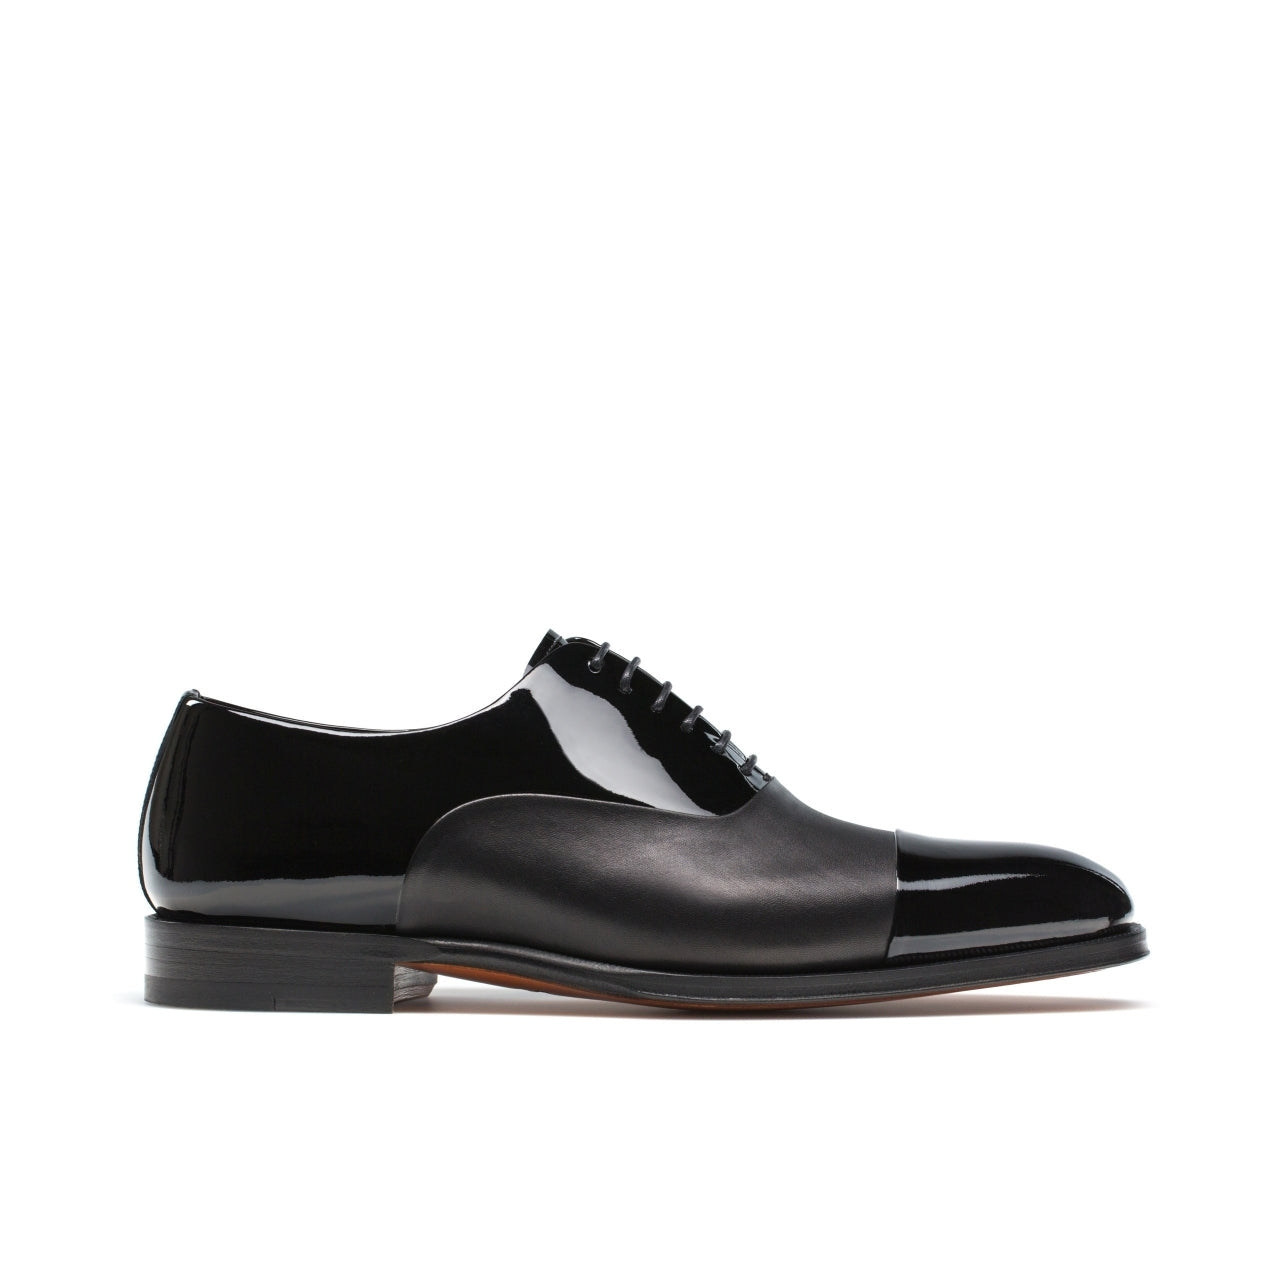 Magnanni 13880 Cesar Men's Shoes Black Patent / Nappa Leather Cap-Toe ...